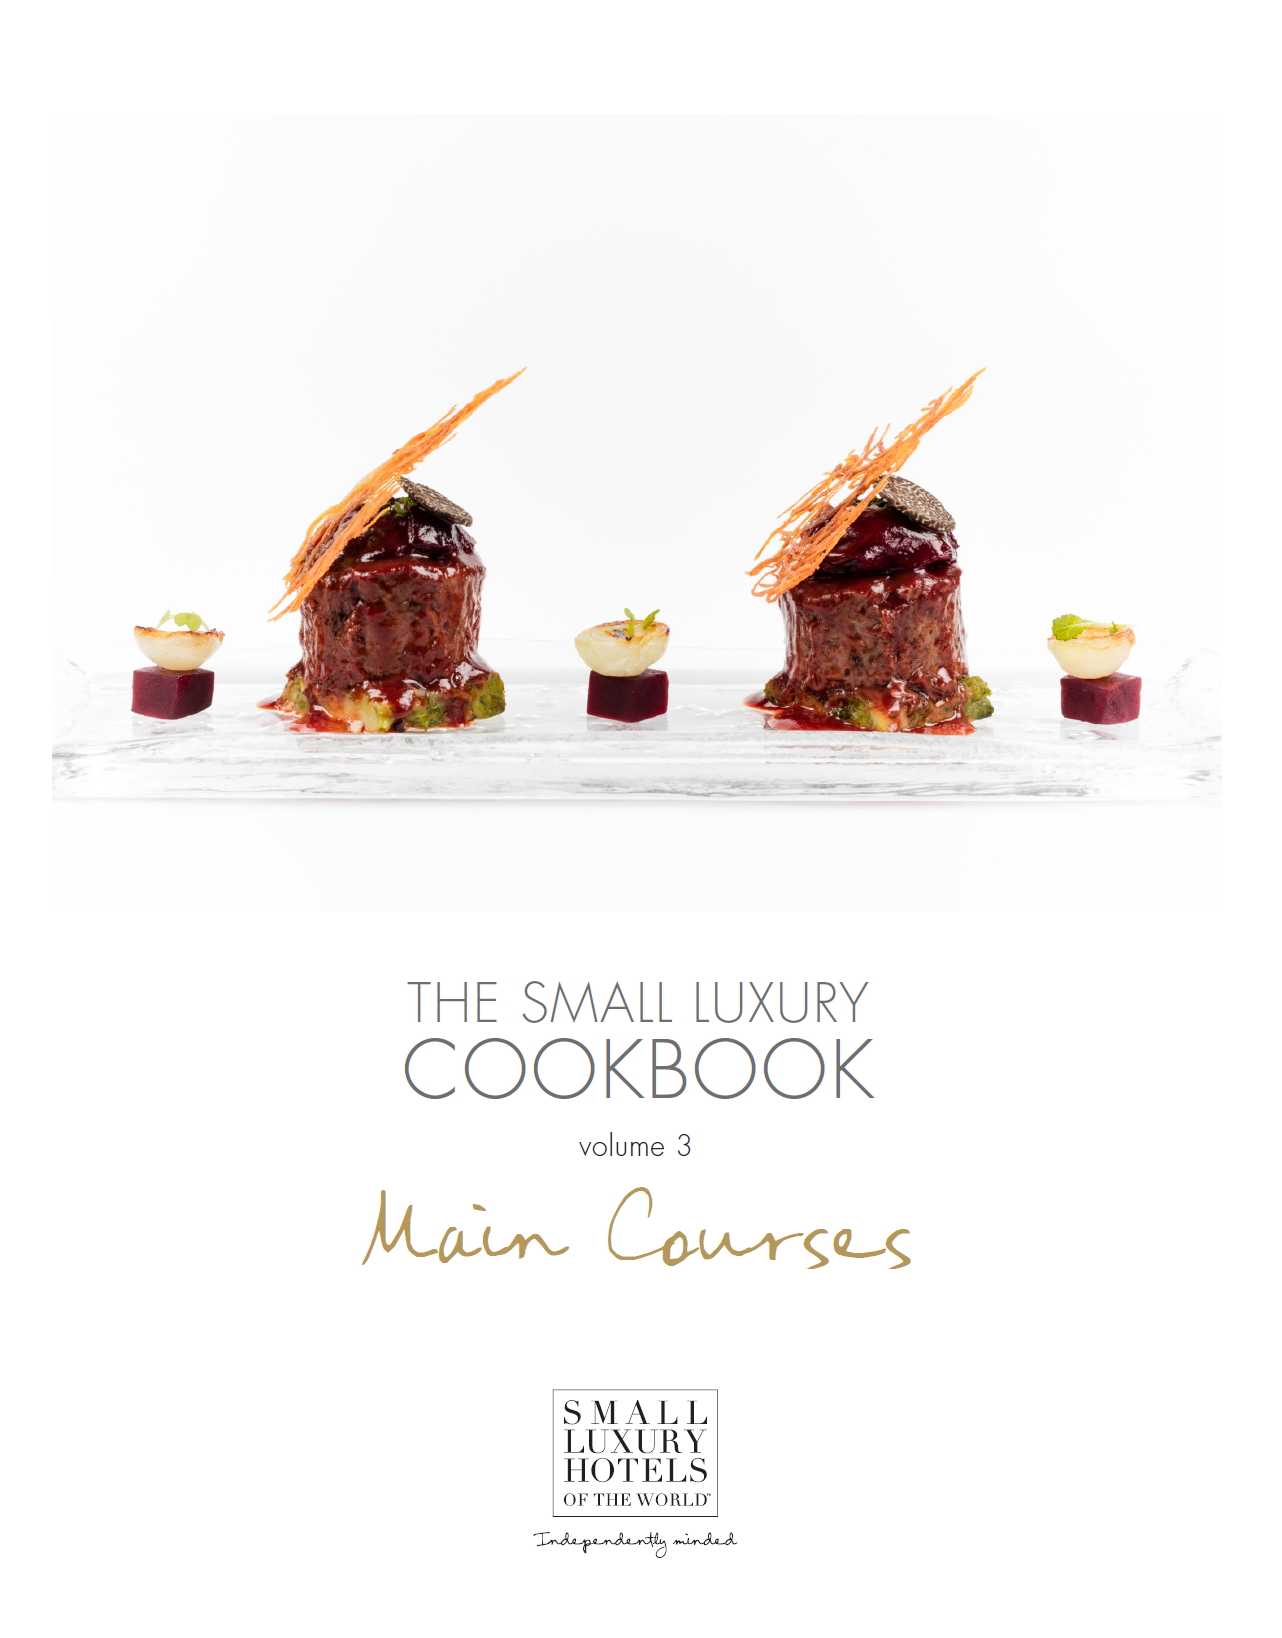 The Small Luxury Cookbook